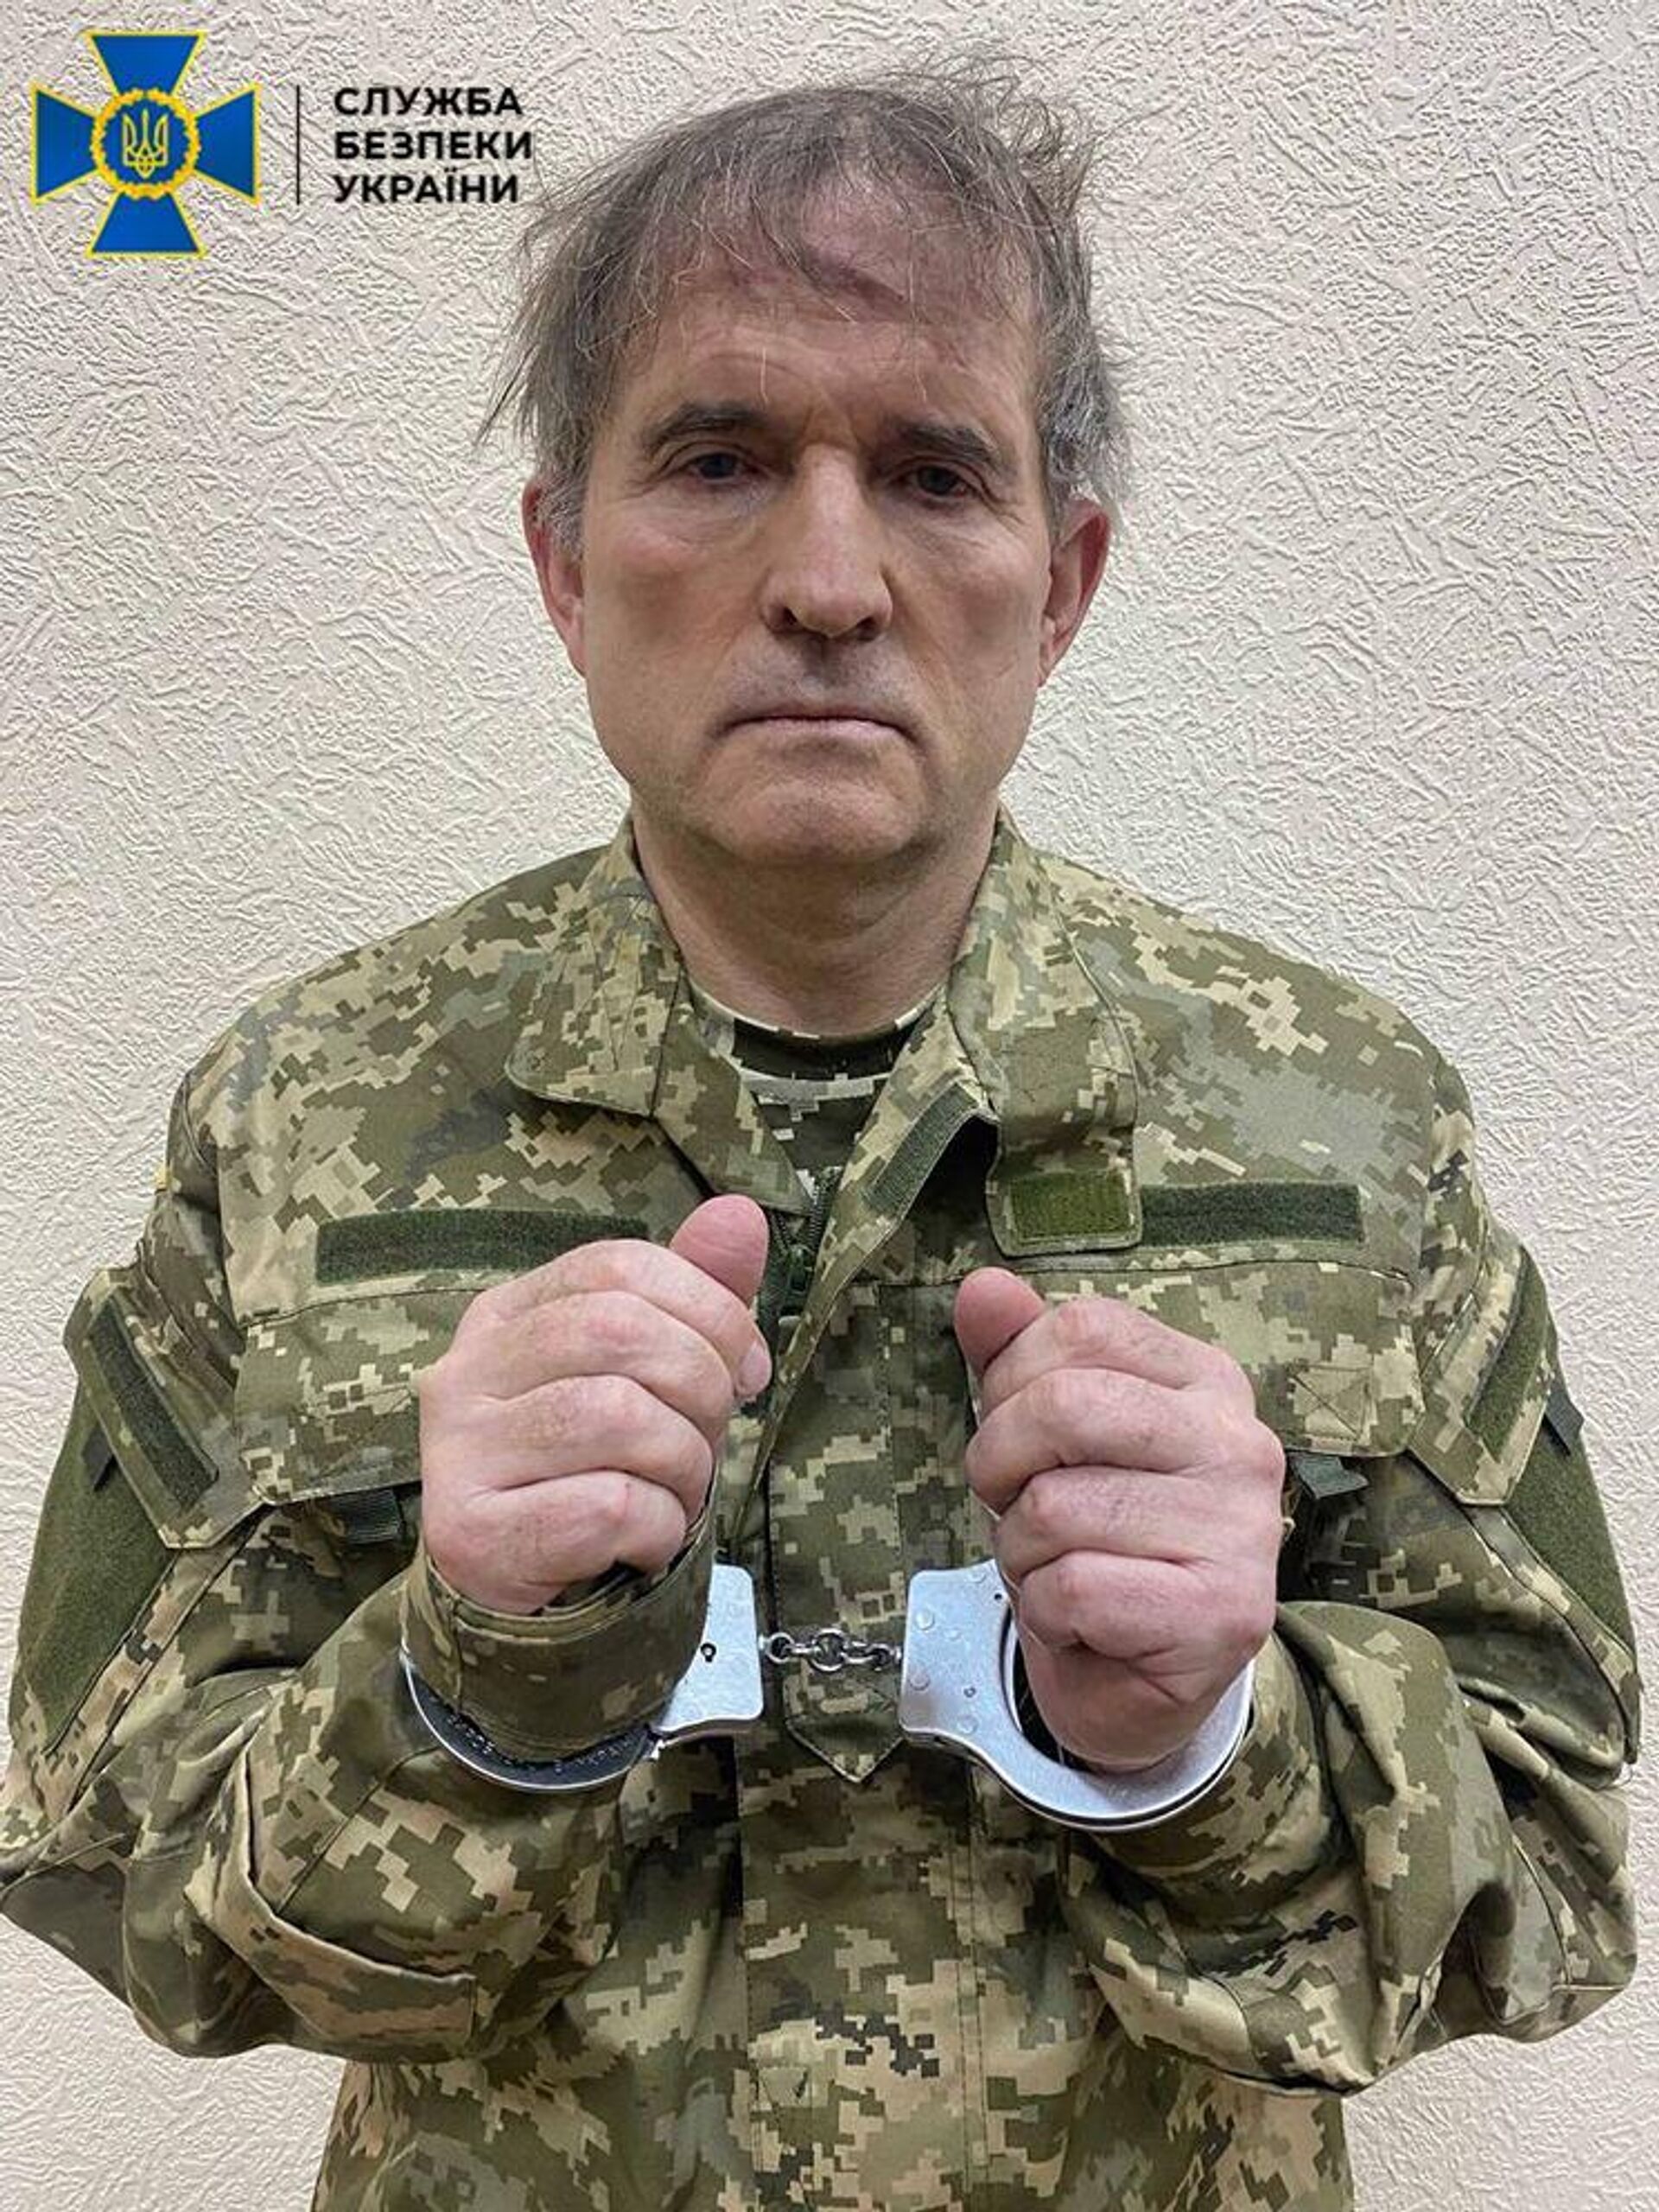 A photo of Ukrainian MP Viktor Medvedchuk, posted on Telegram on April 12, 2022. - Sputnik International, 1920, 12.04.2022